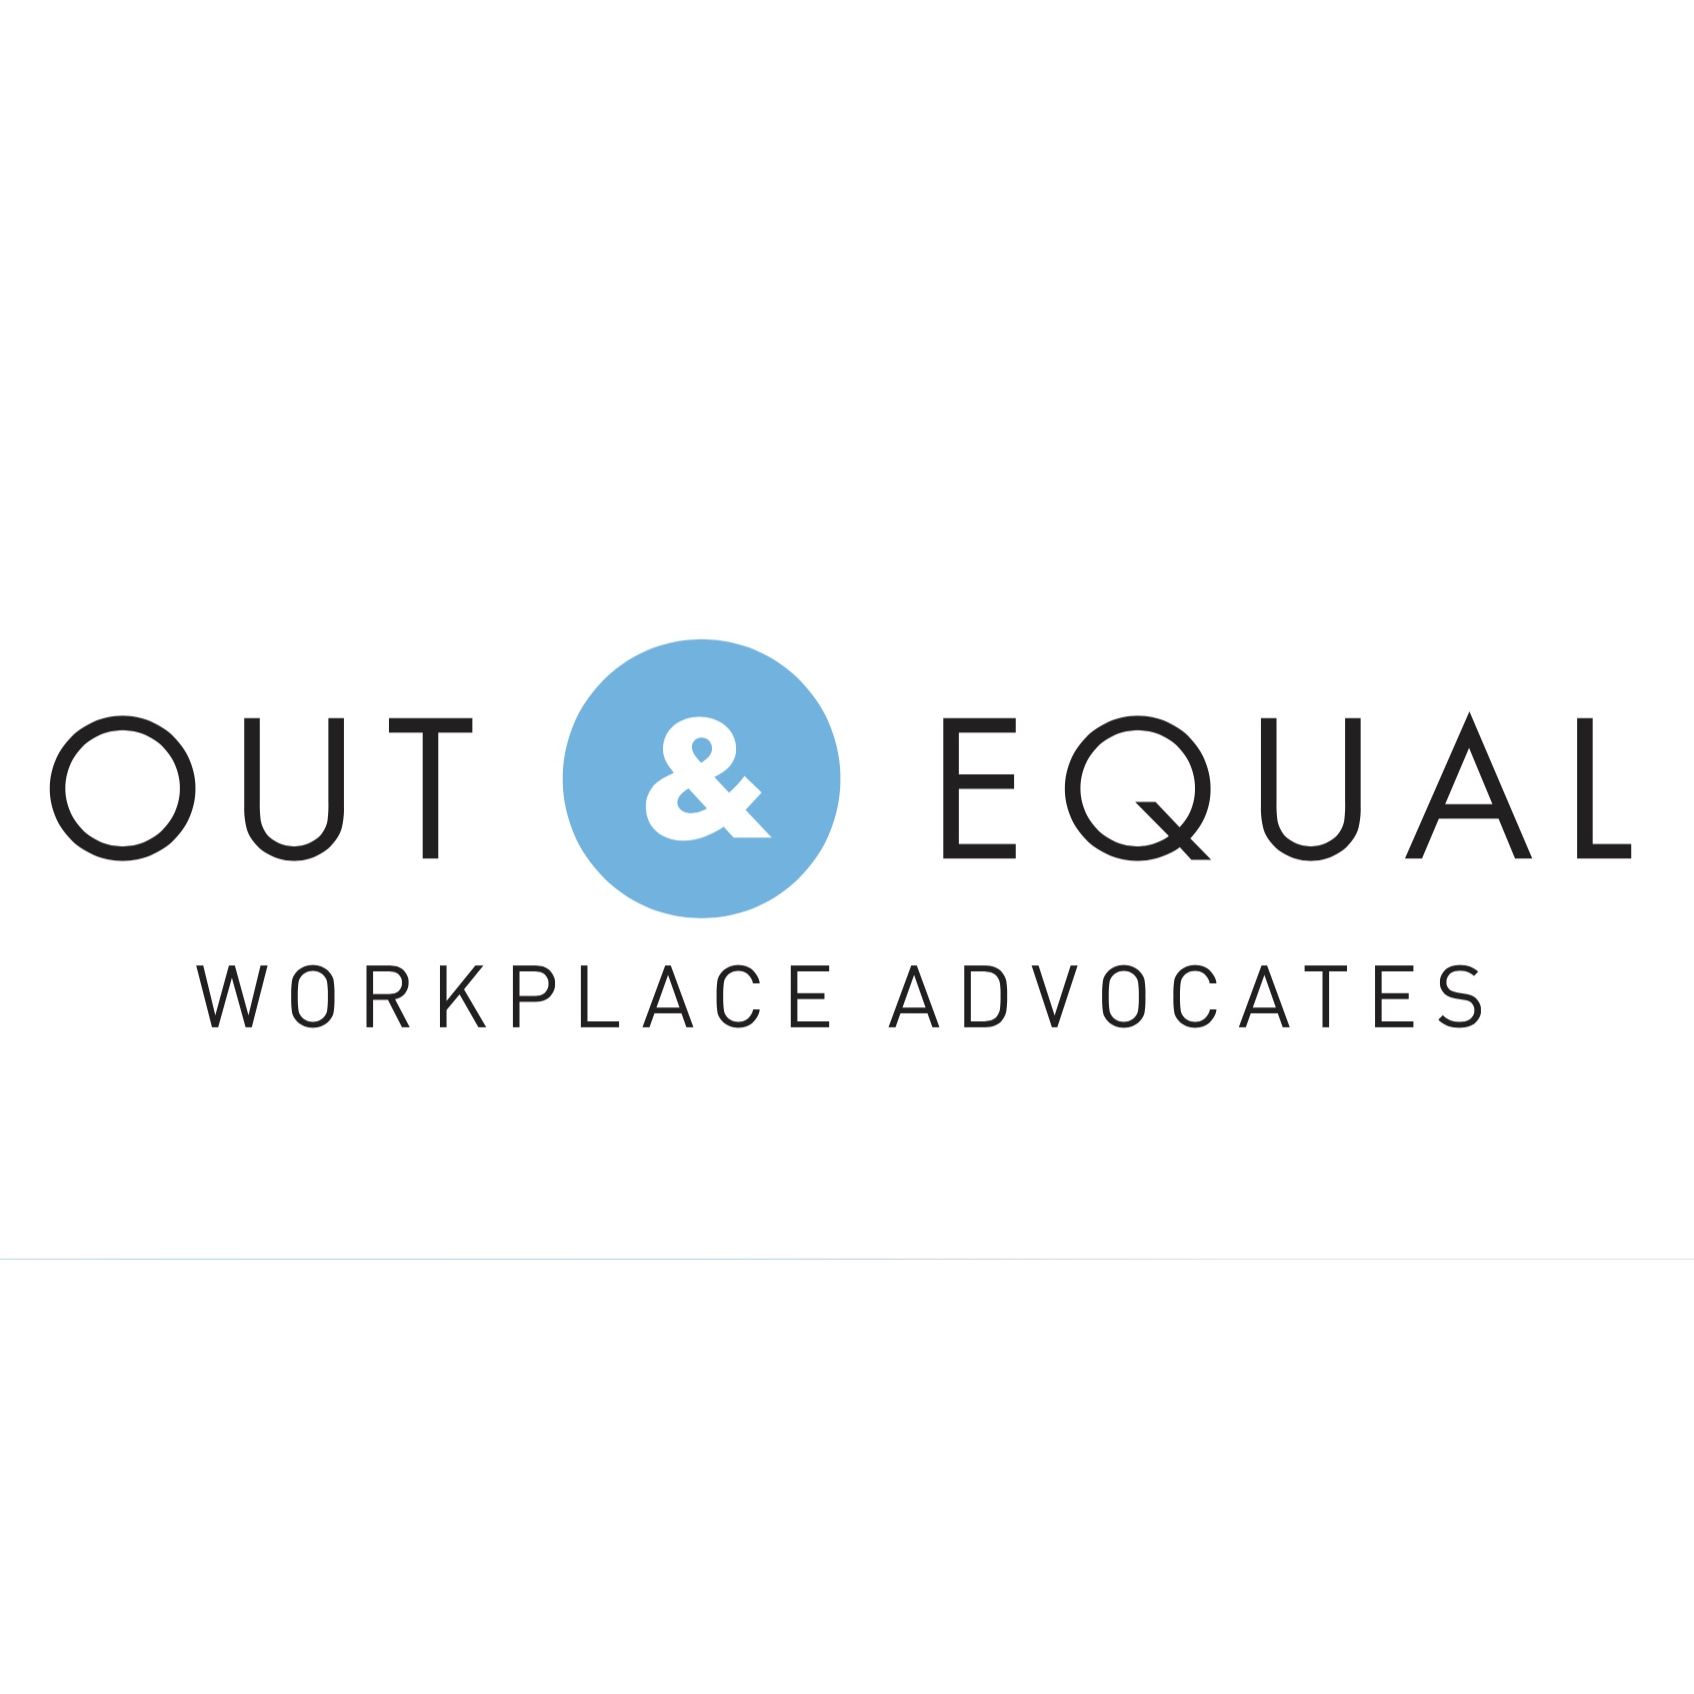 LGBTQ Organizations in California - Out & Equal